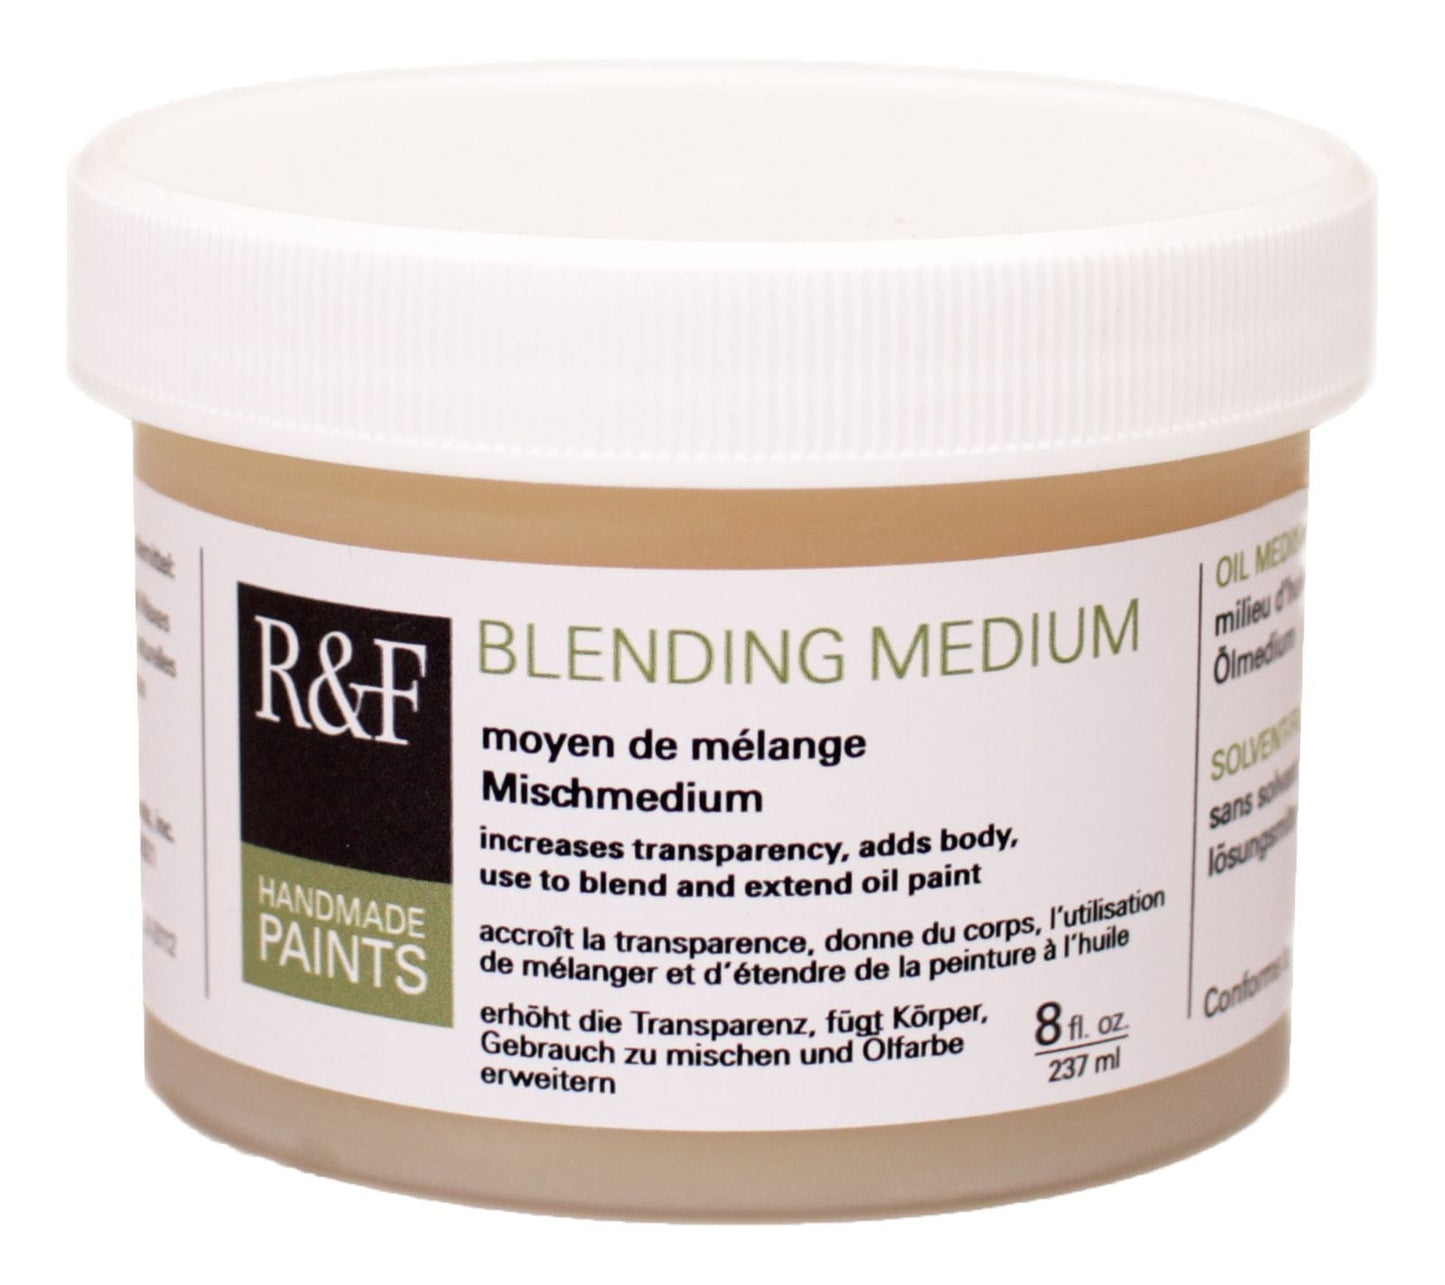 R&F Oil Medium R&F - Blending Medium - 8oz Jar - Item #830